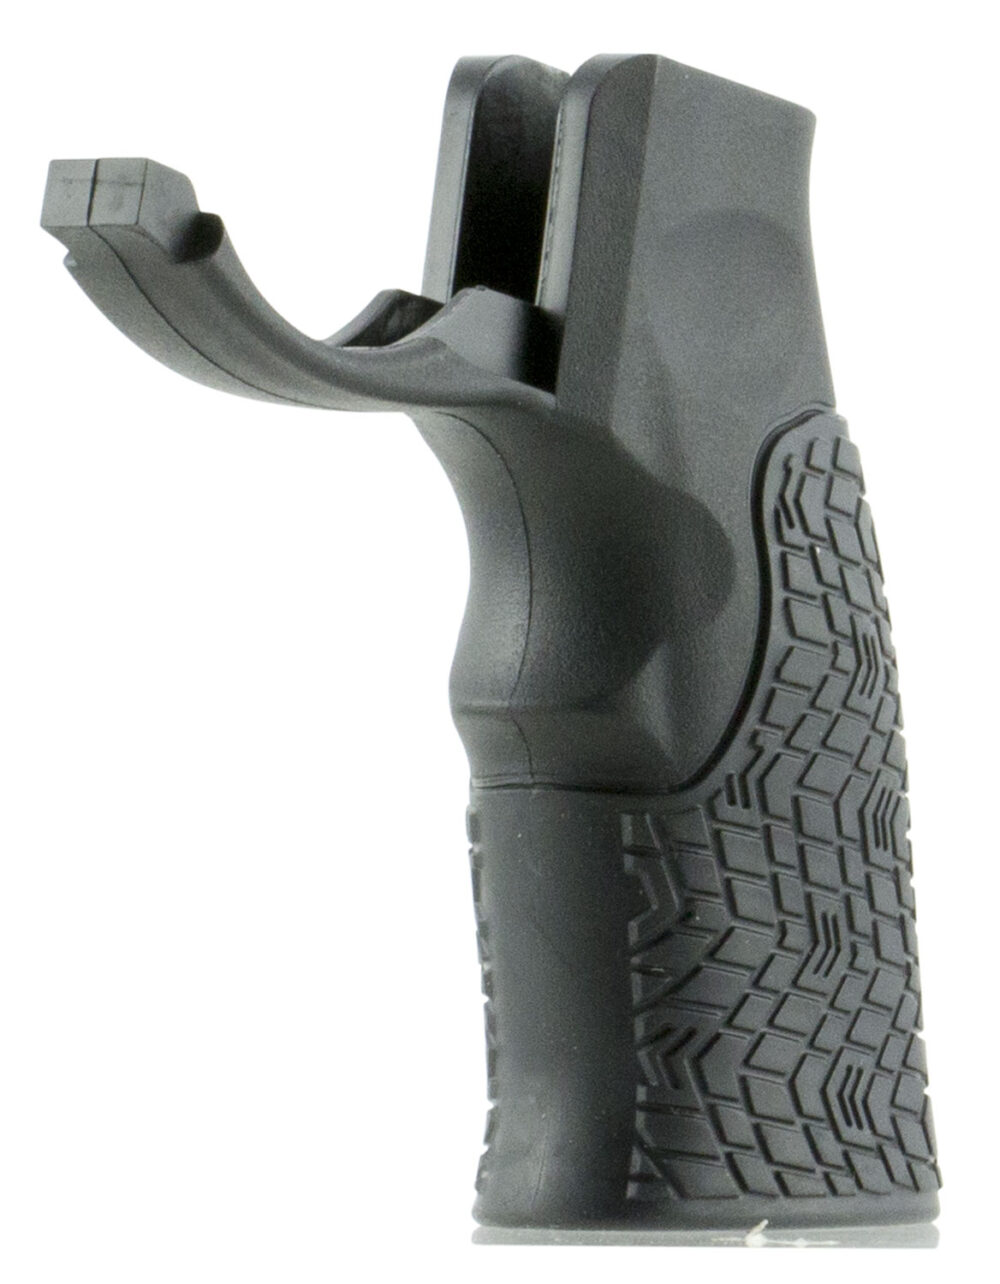 Daniel Defense Pistol Grip AR-15 Textured Polymer Black (21-071-05177-0060)